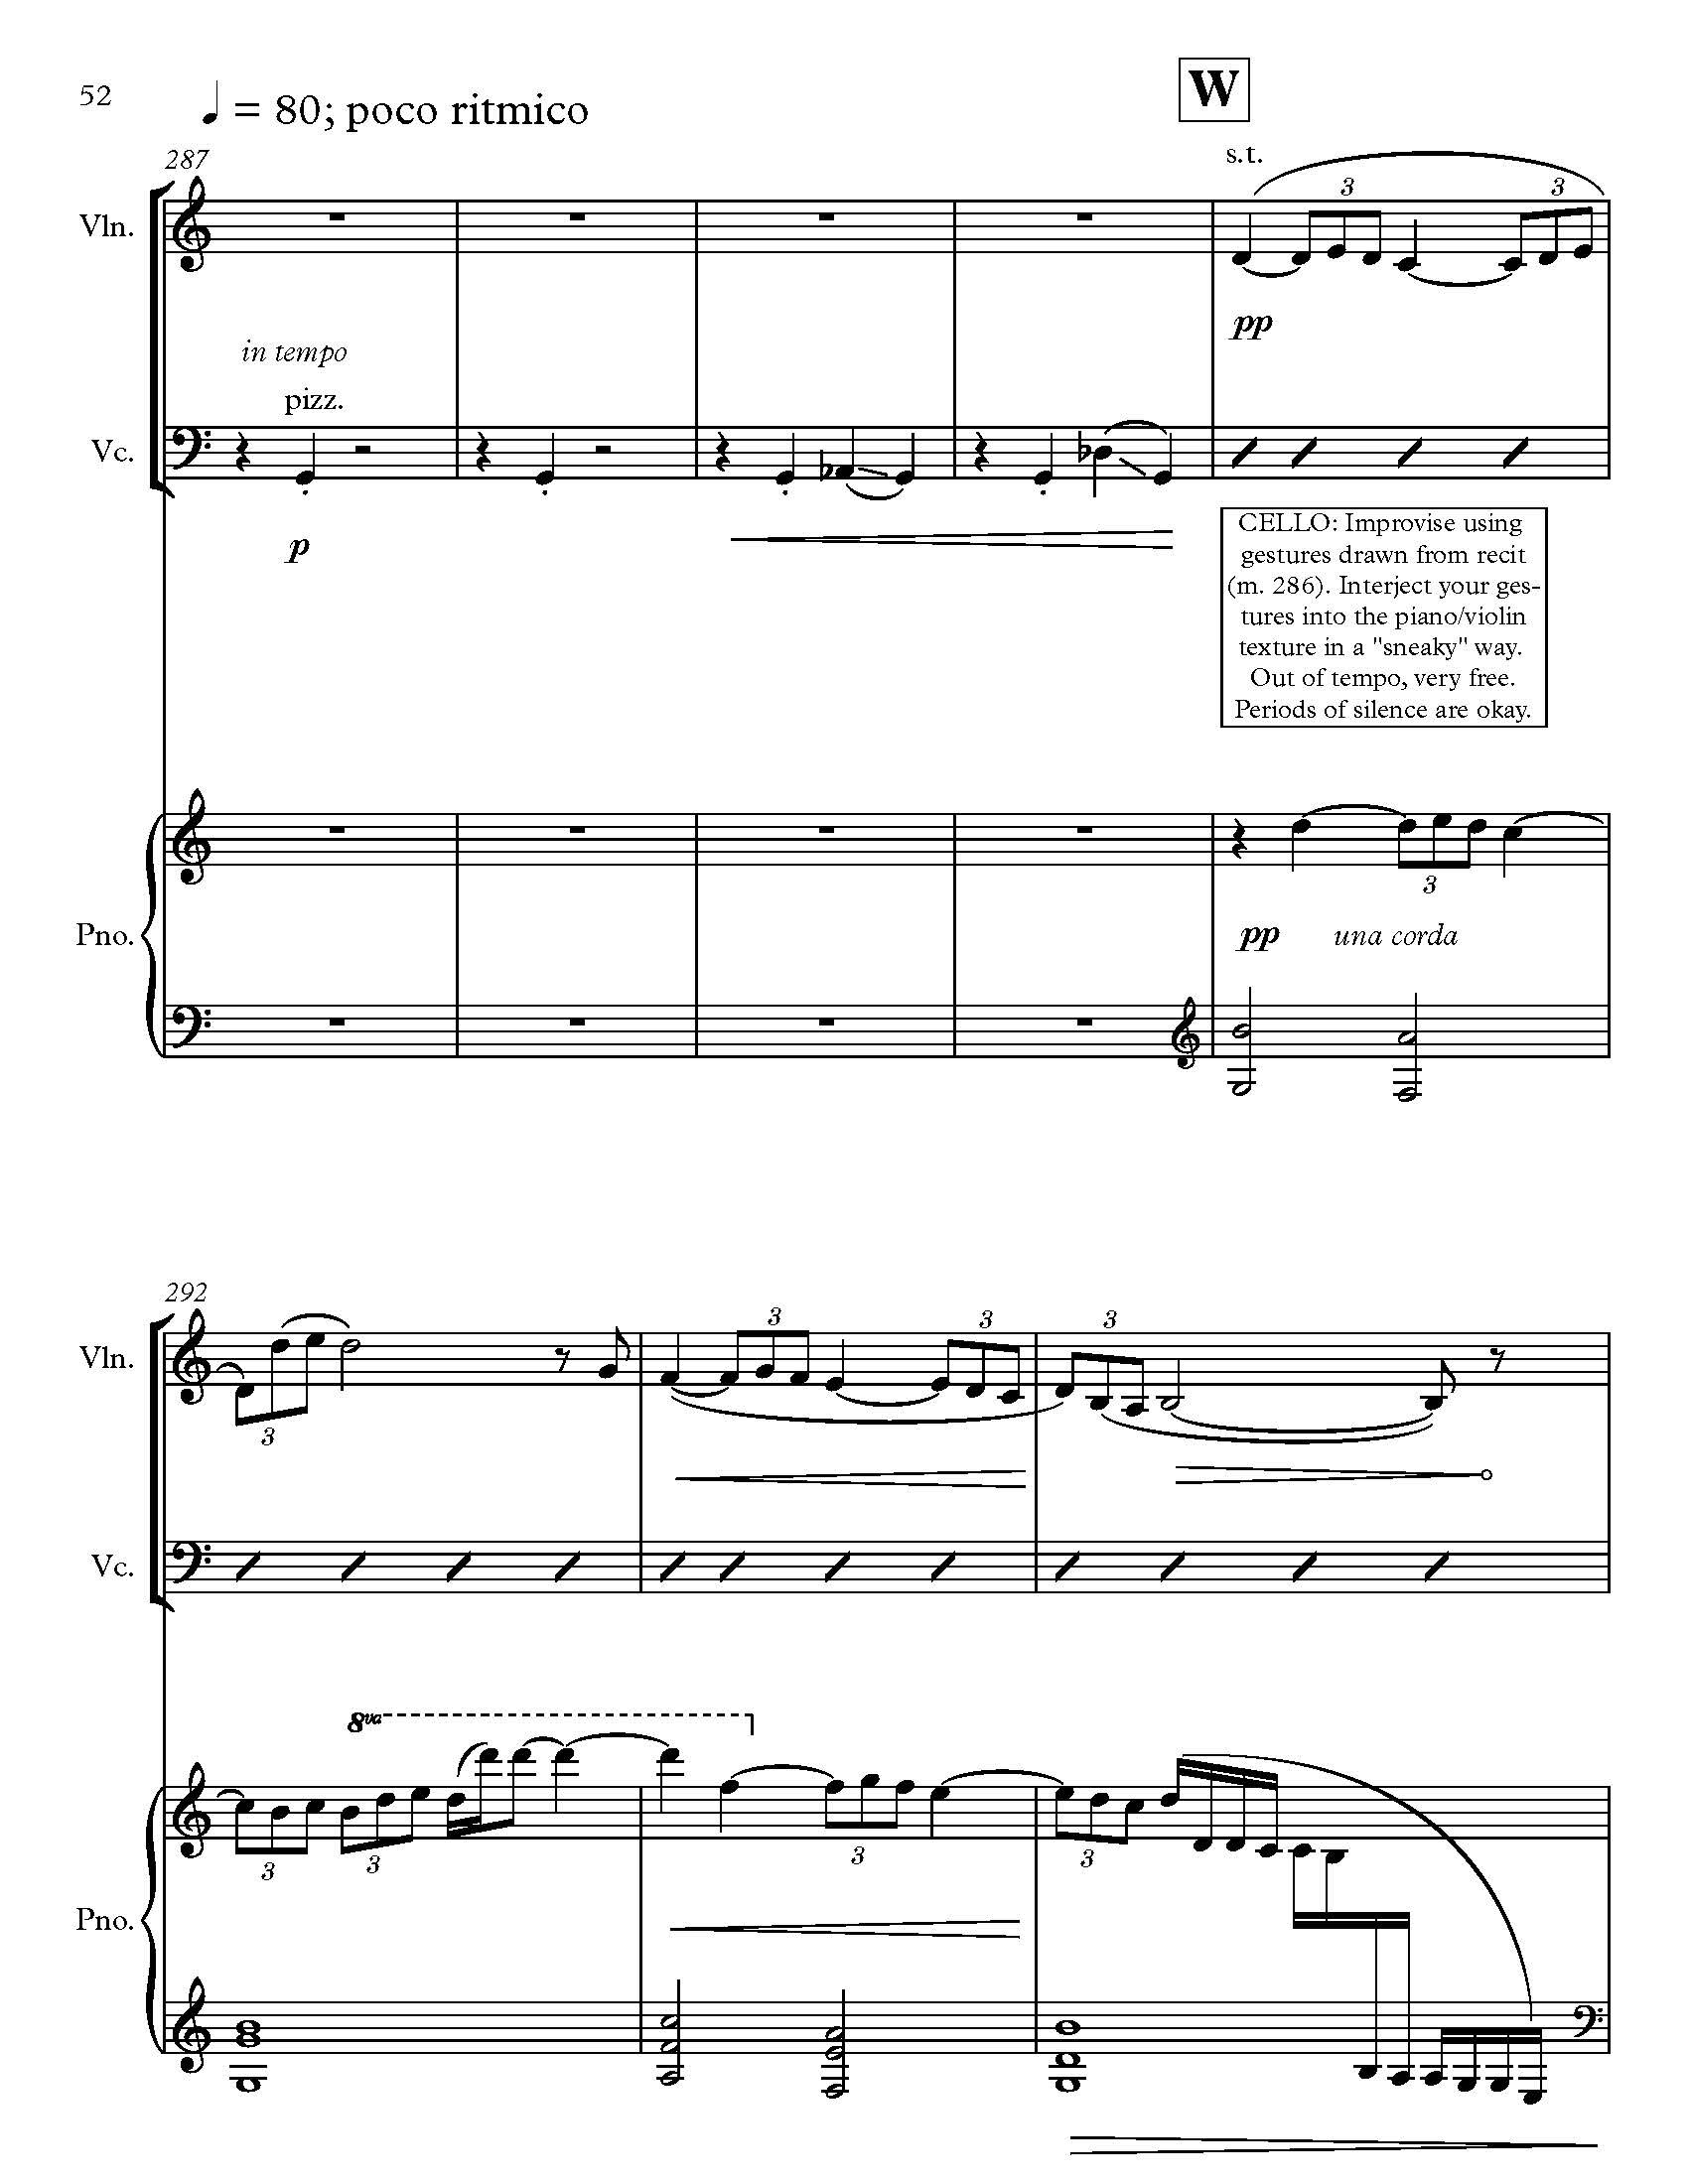 The Birth of Dangun - Complete Score_Page_058.jpg